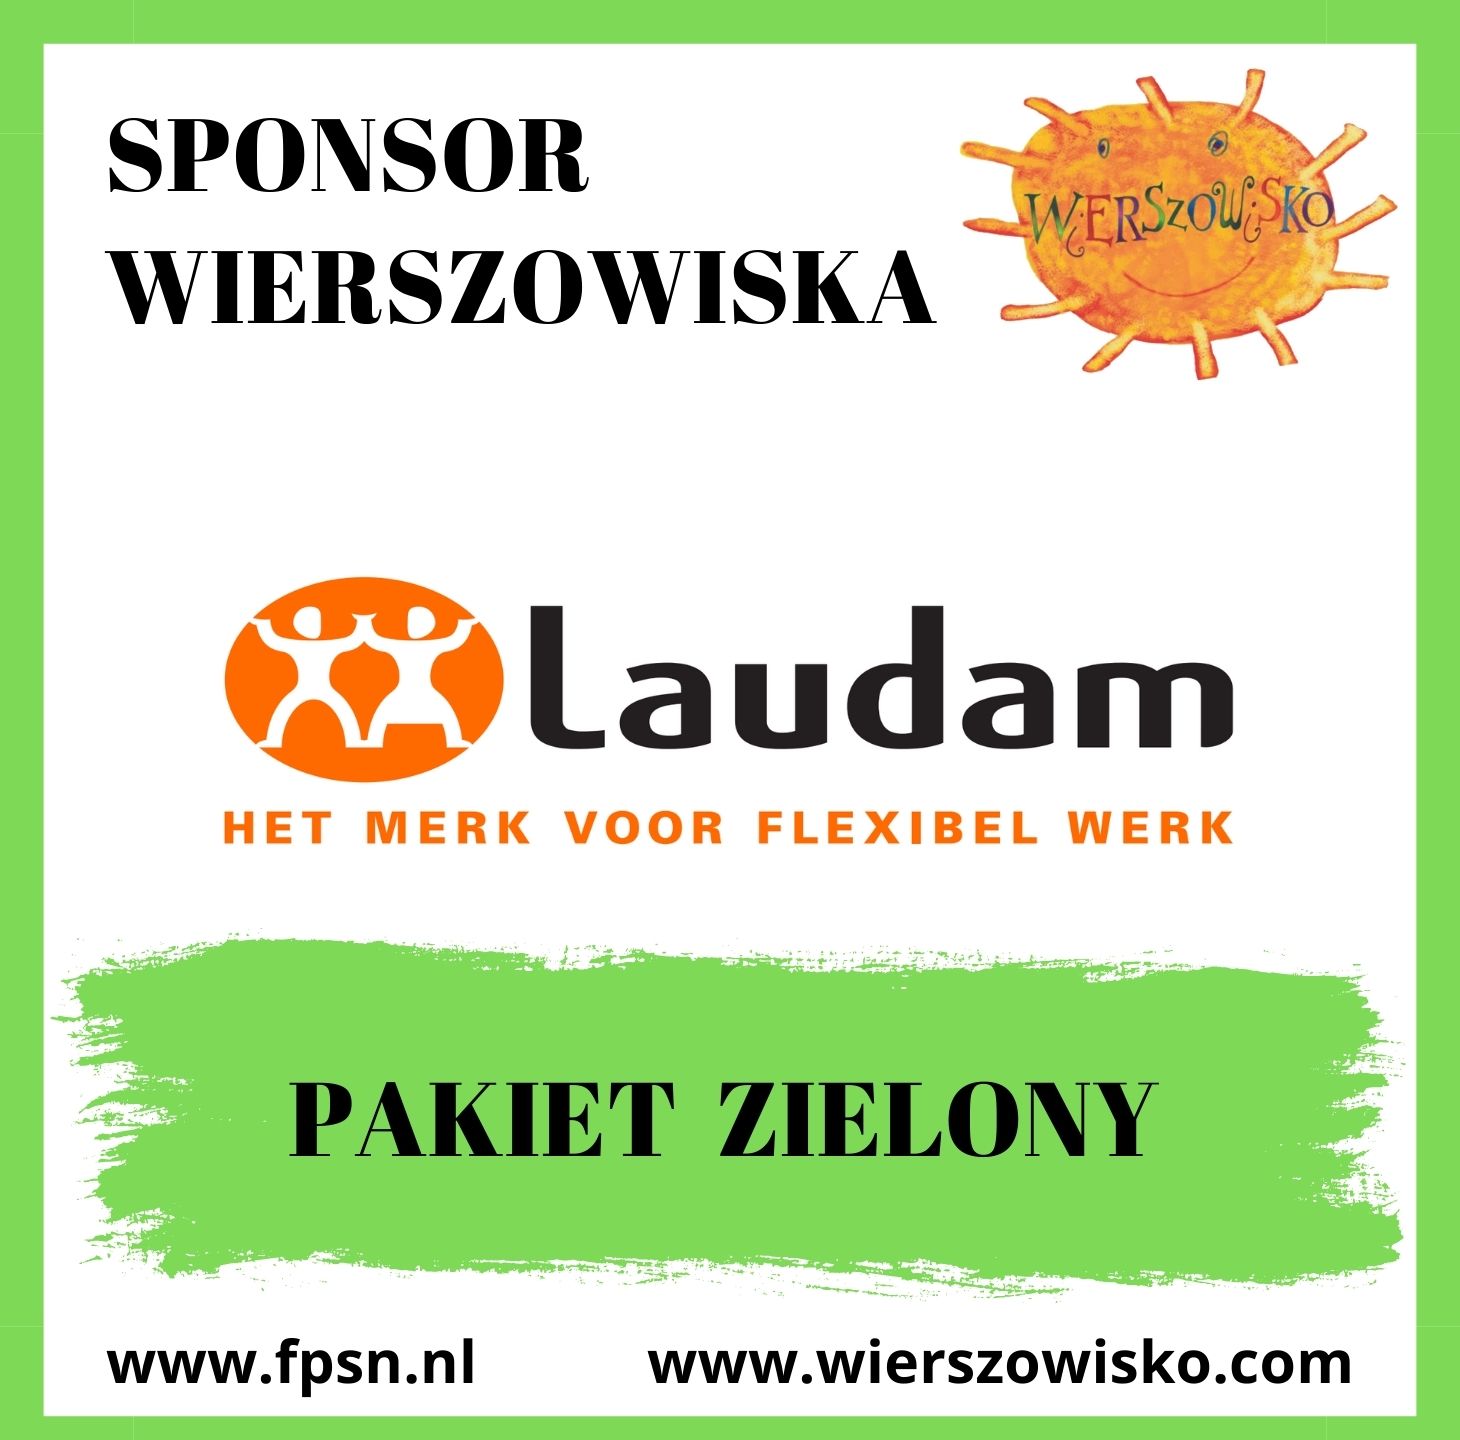 Laudm sponsor